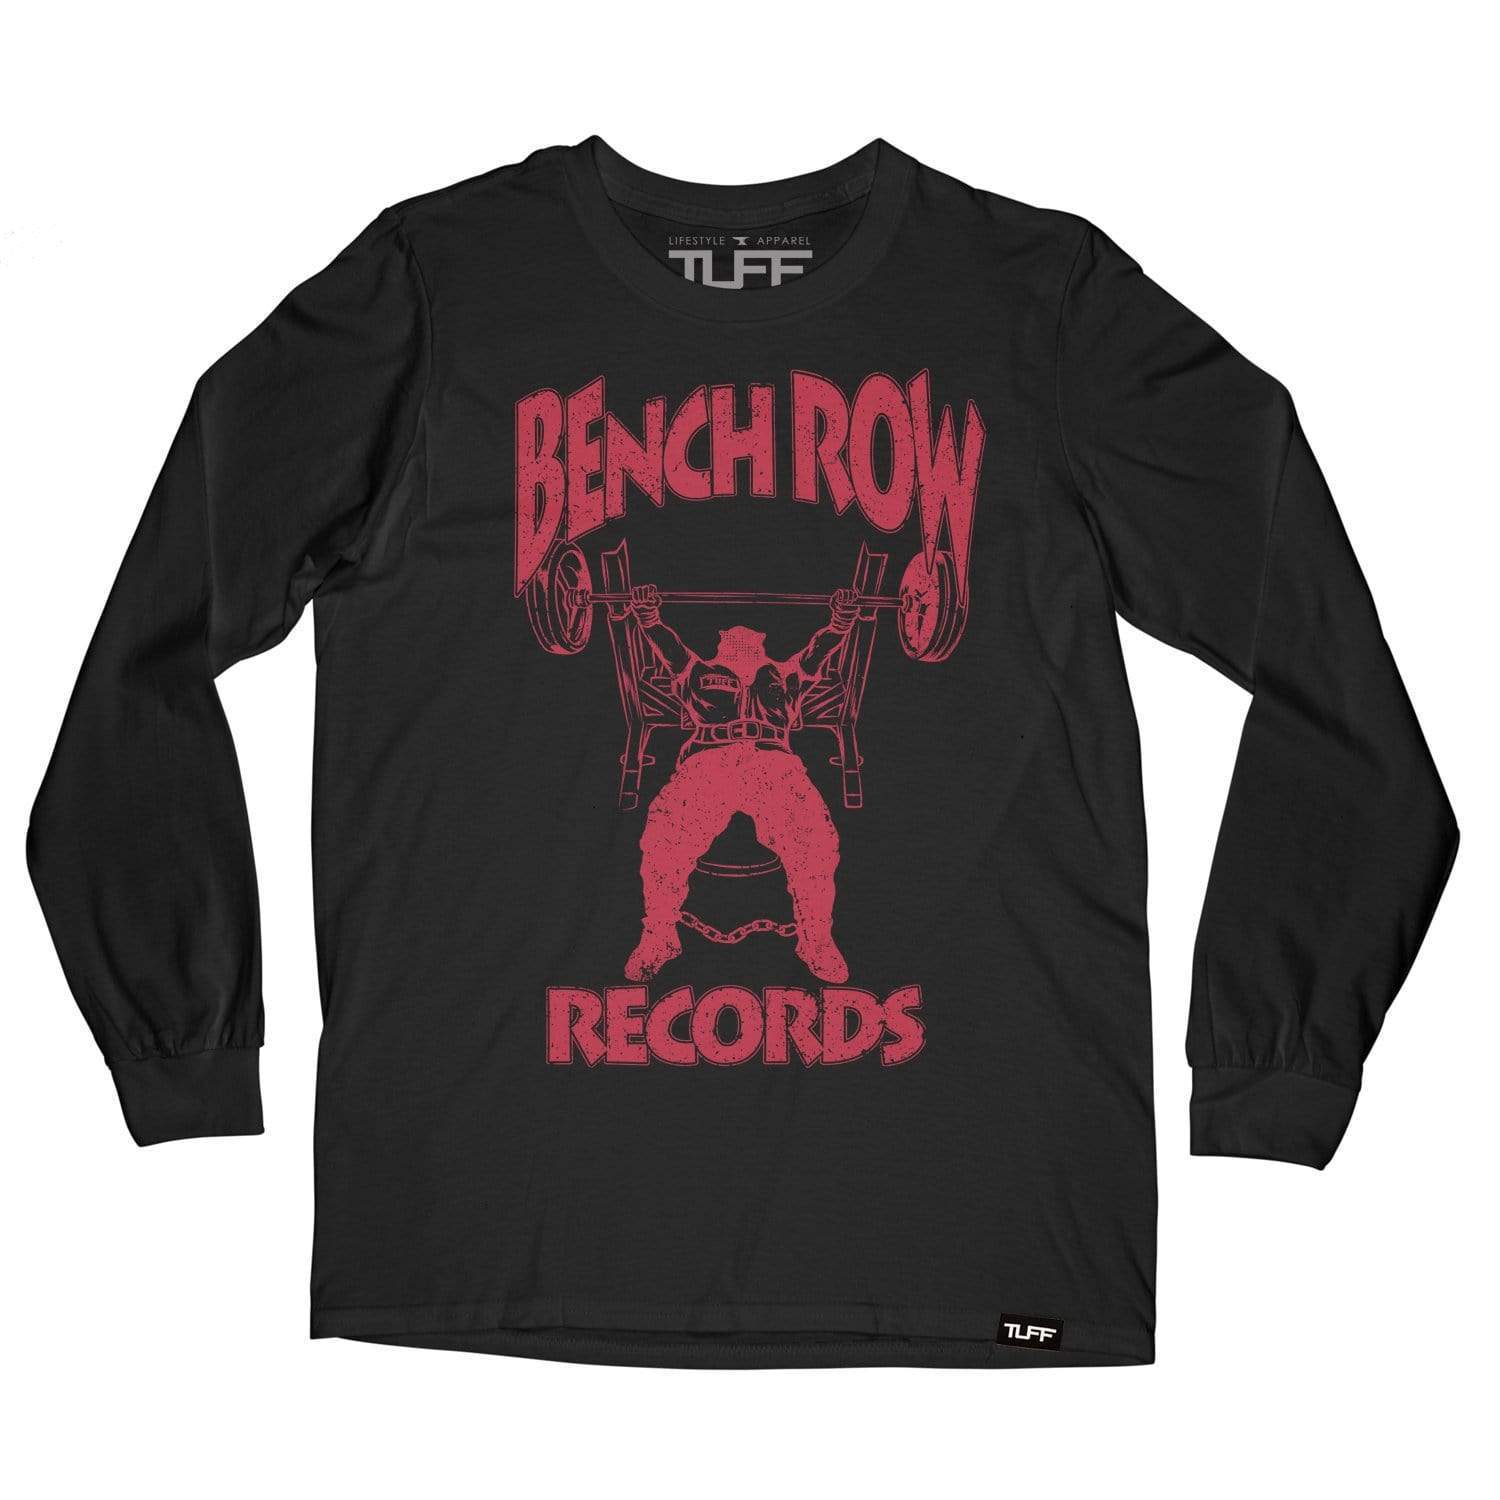 Bench Row Records Long Sleeve Tee Men's Long Sleeve T-Shirt